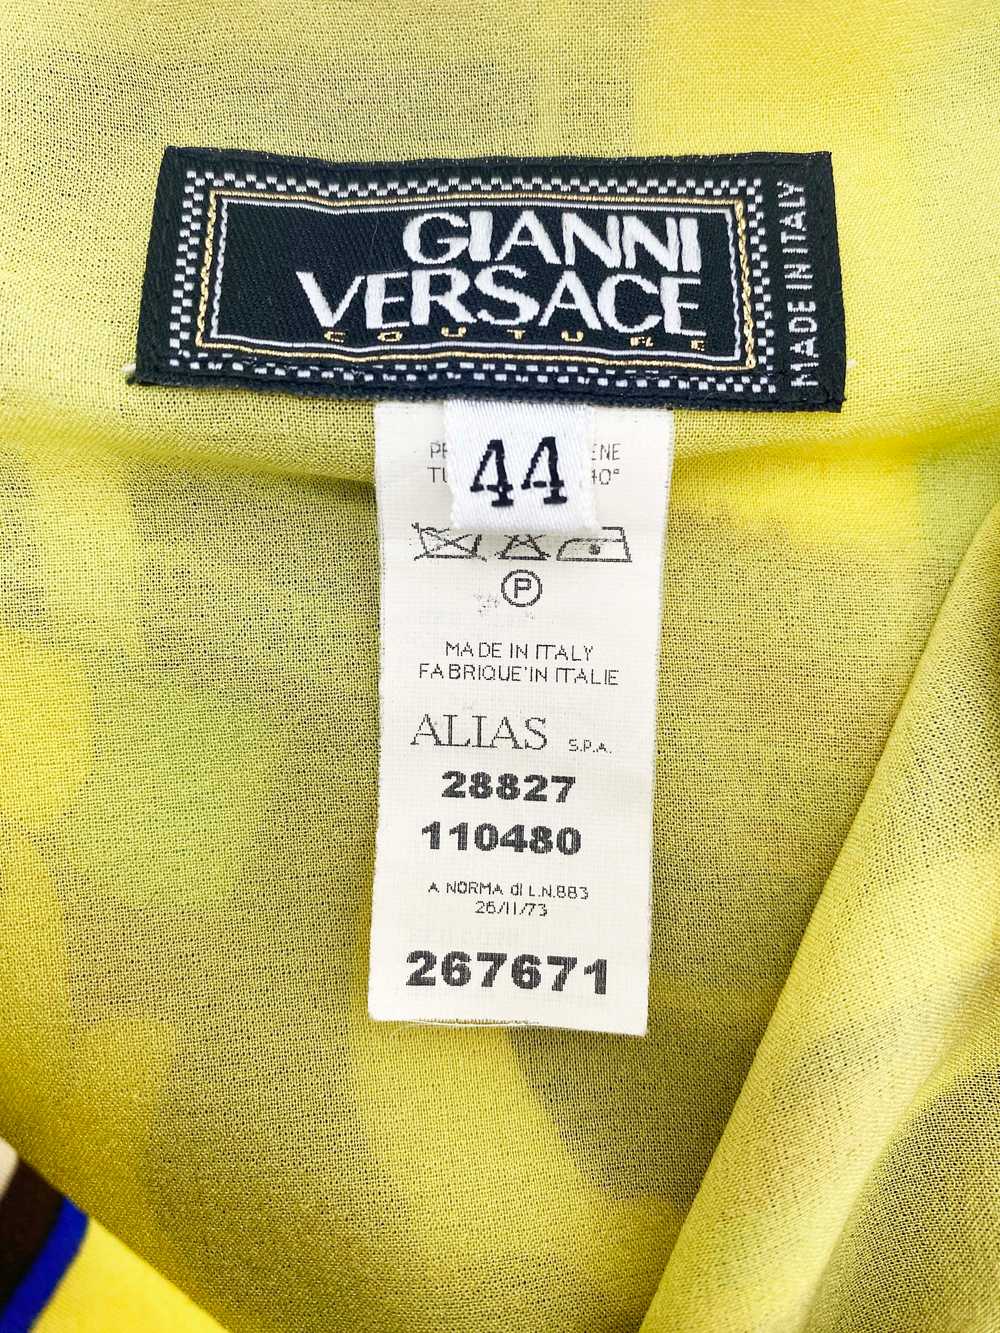 Gianni Versace S/S 2003 striped silk skirt - image 3